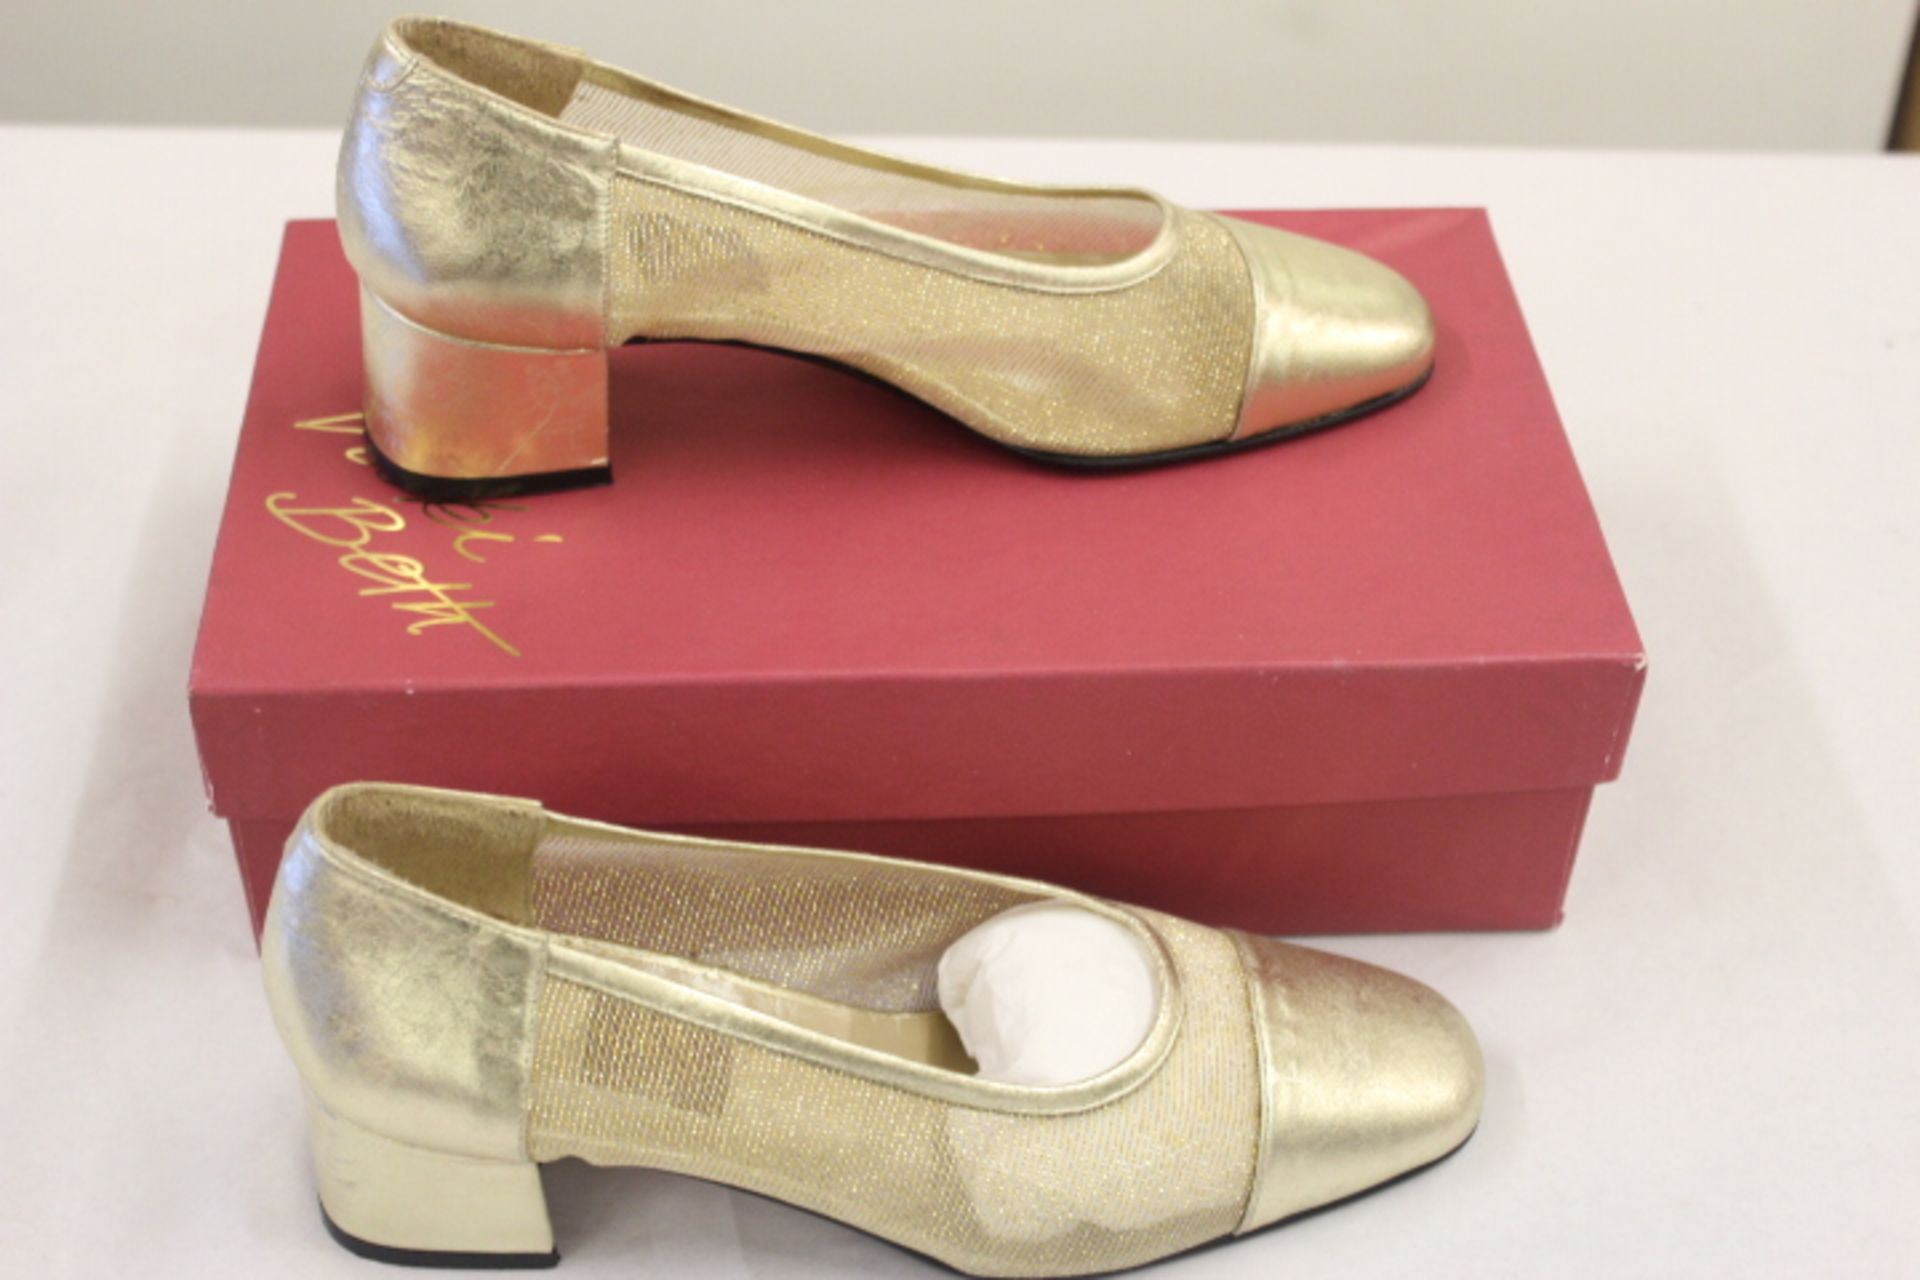 V Pair Ladies Gold Colour Mesh Shoes Size 37 RRP 36.00 - Image 2 of 3